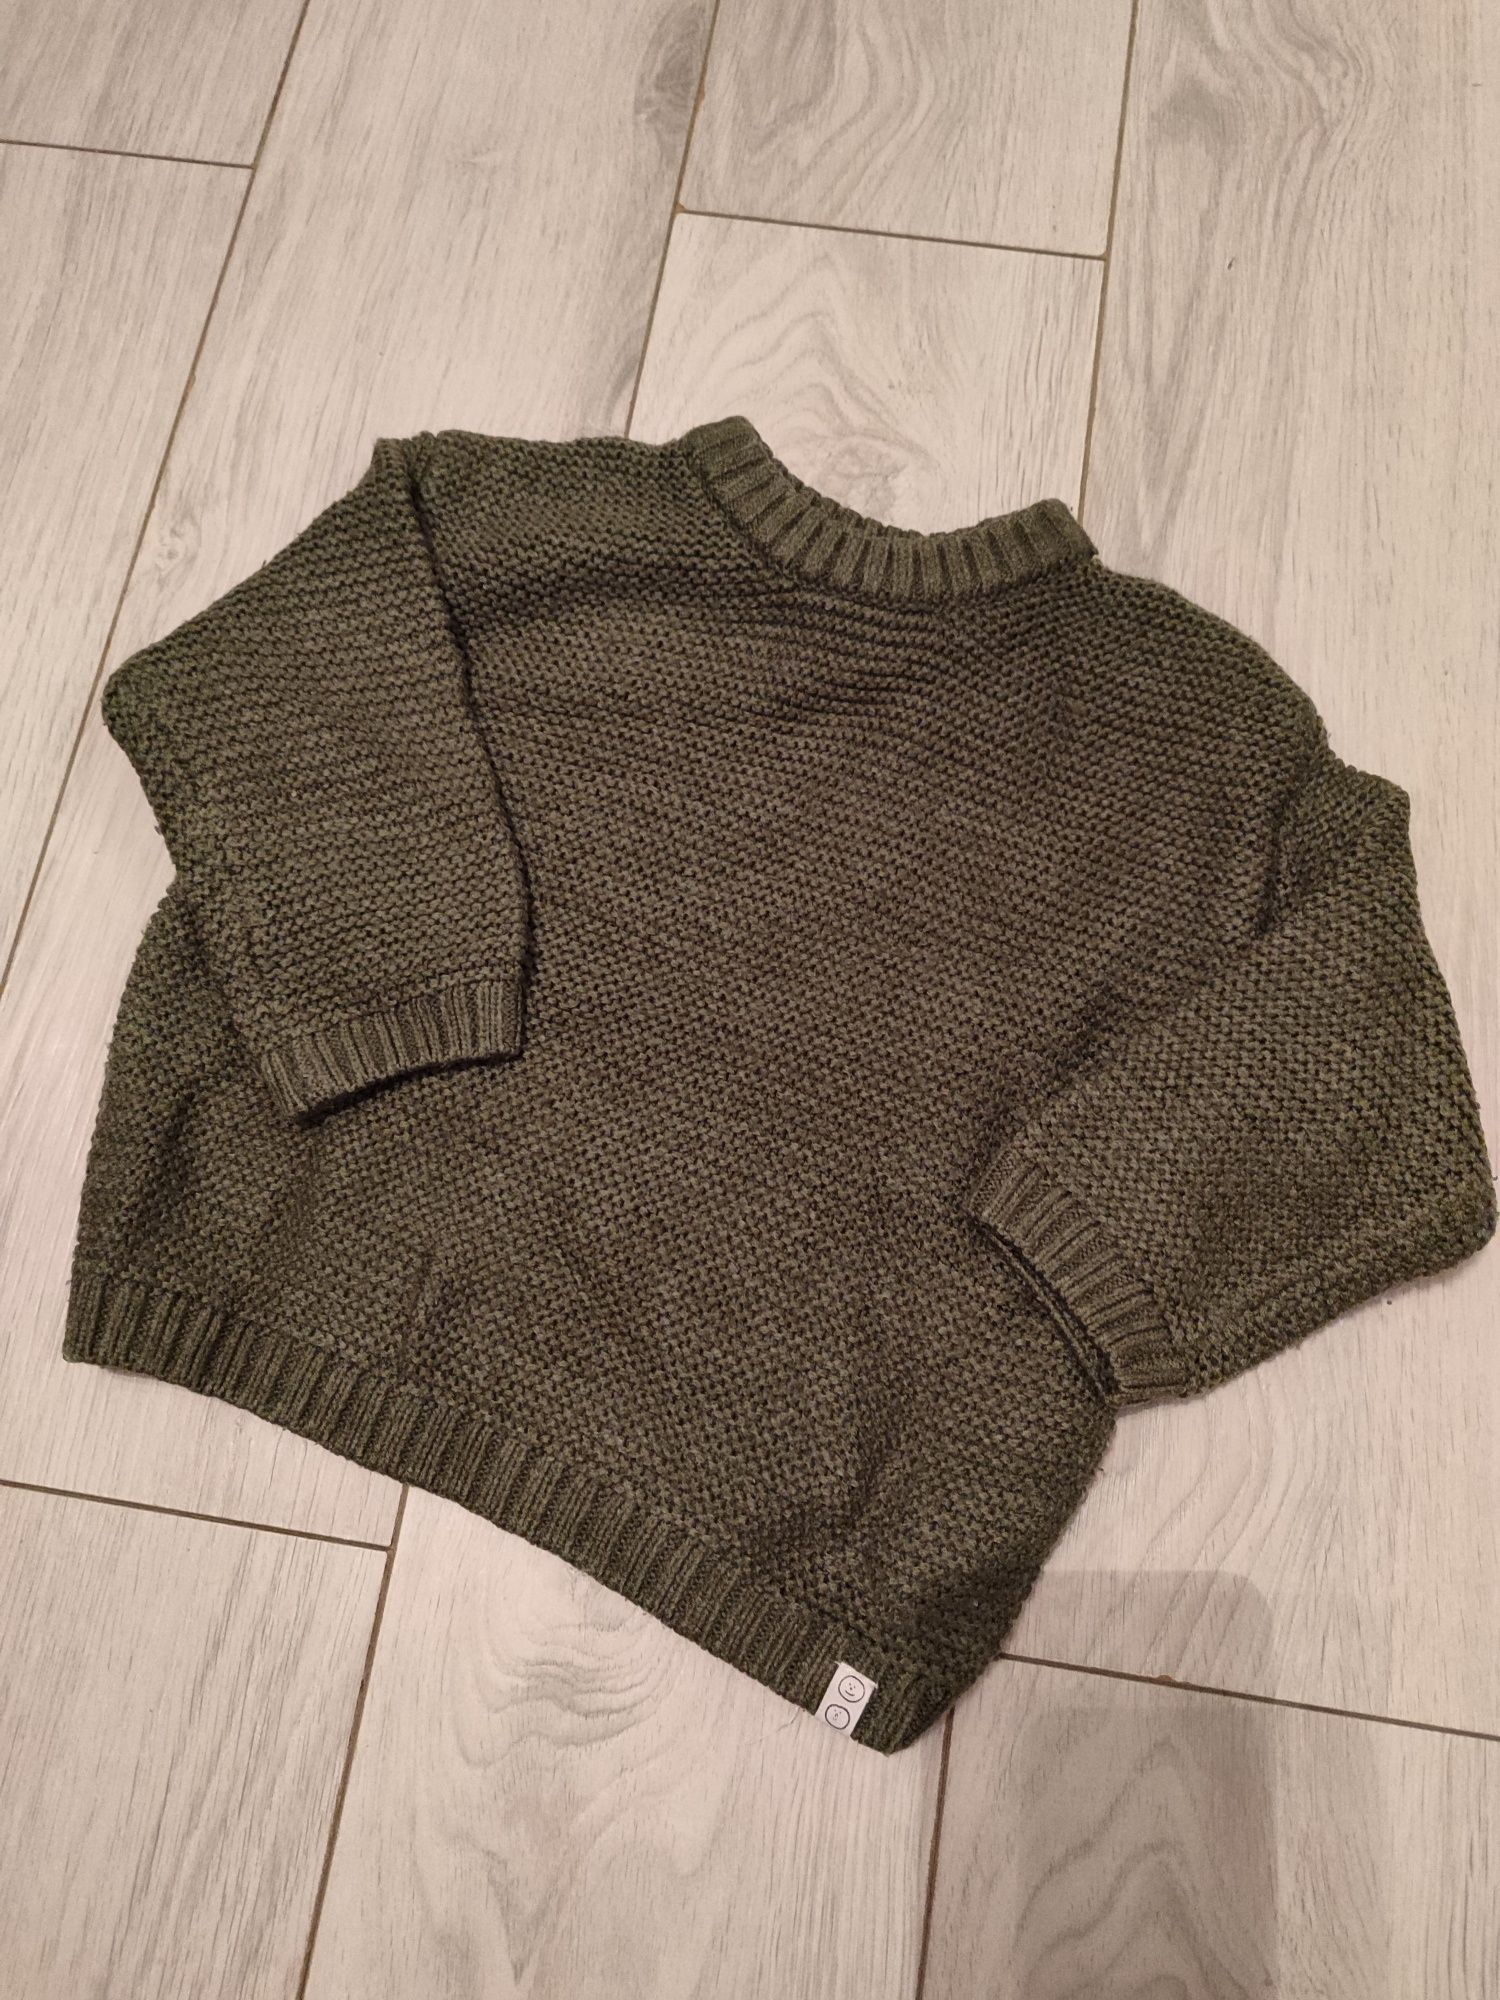 Sweter sweterek butelkowa zieleń Zara dla chłopca r86